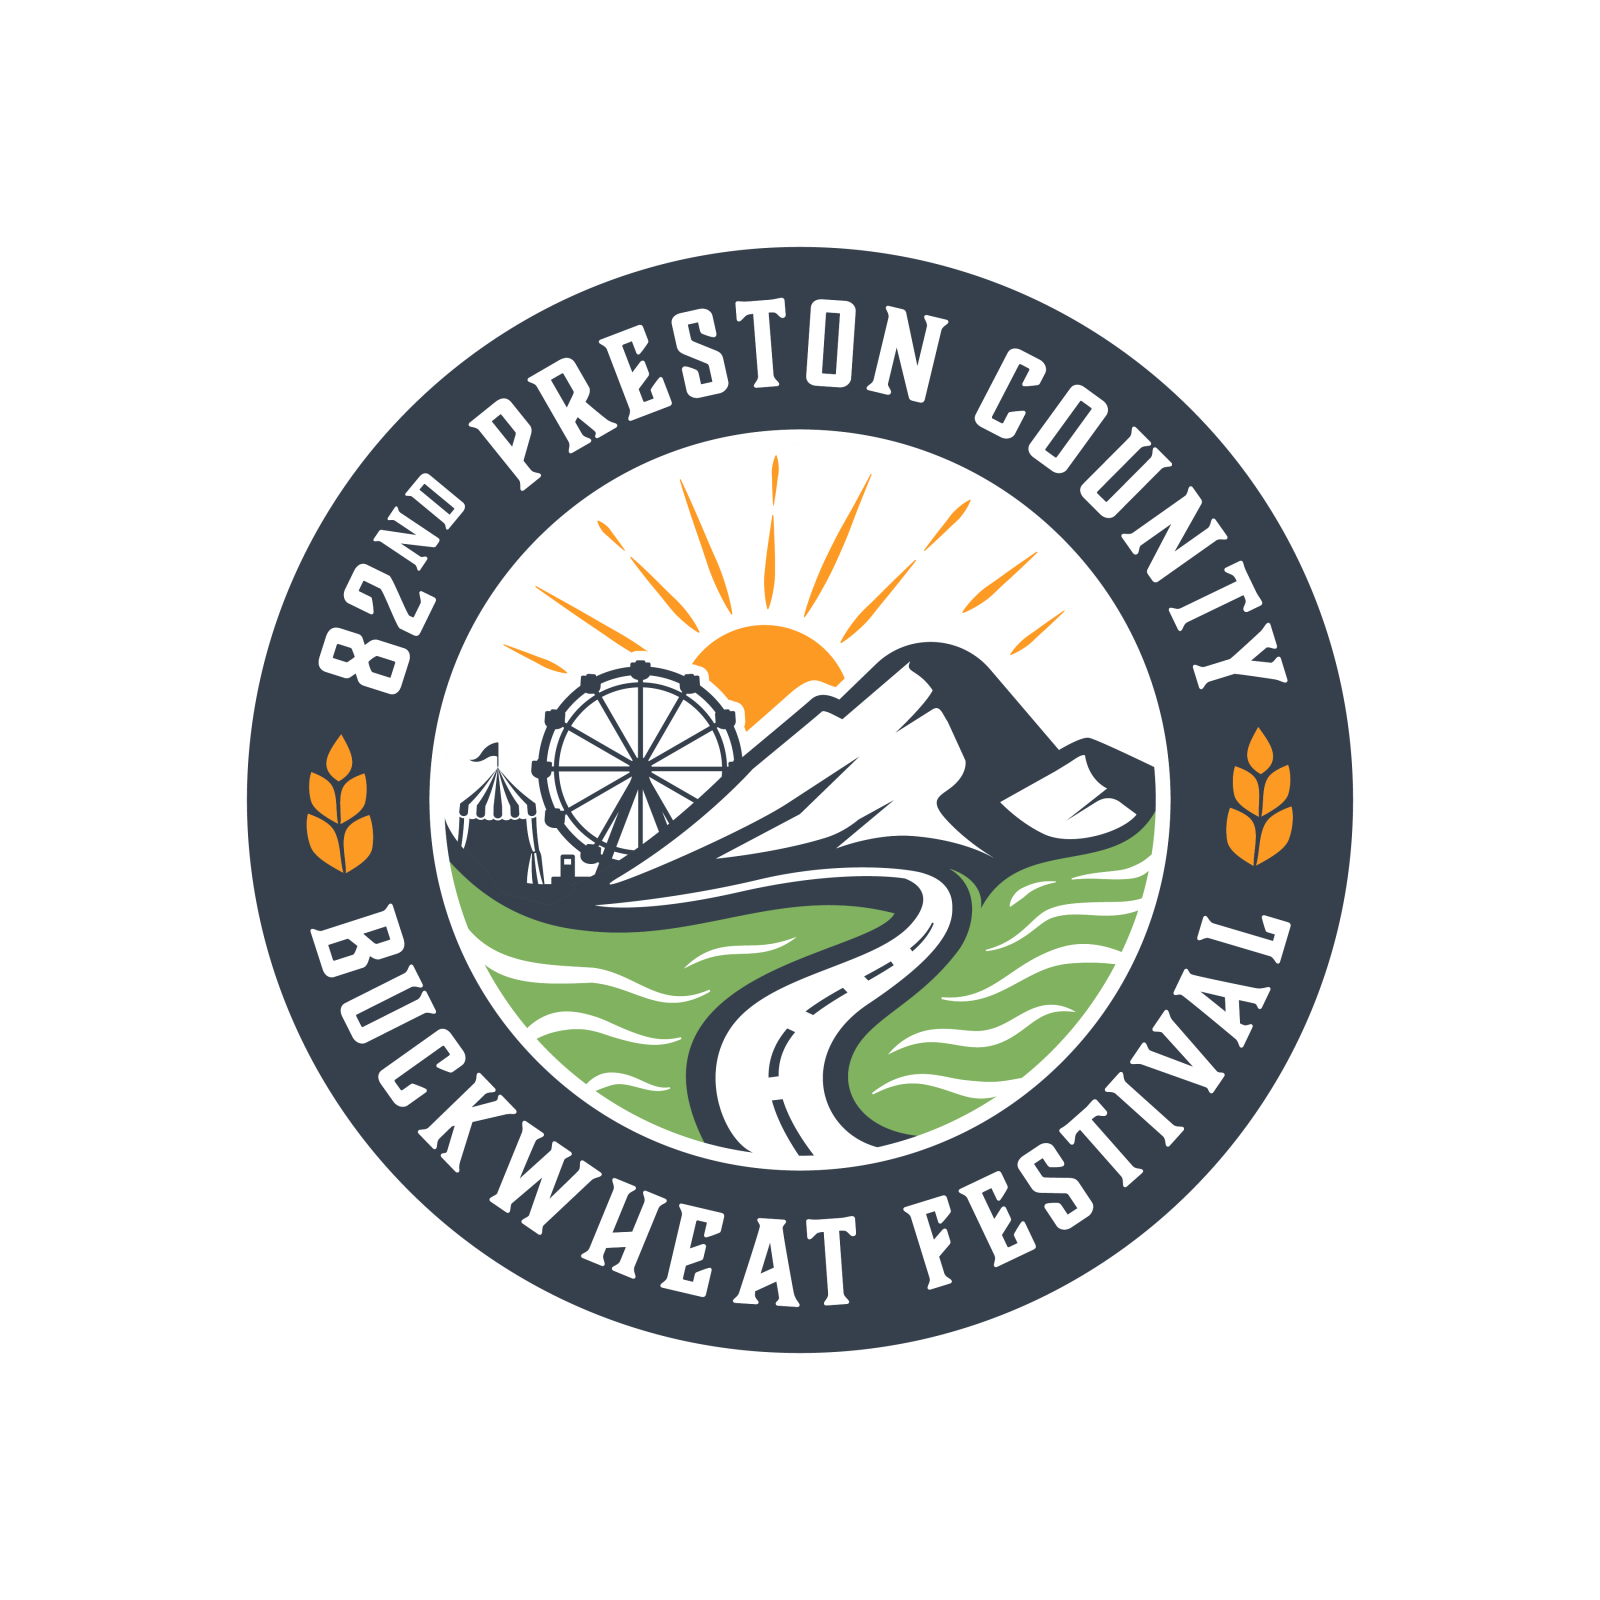 Preston County Buckwheat Festival Photo - Click Here to See